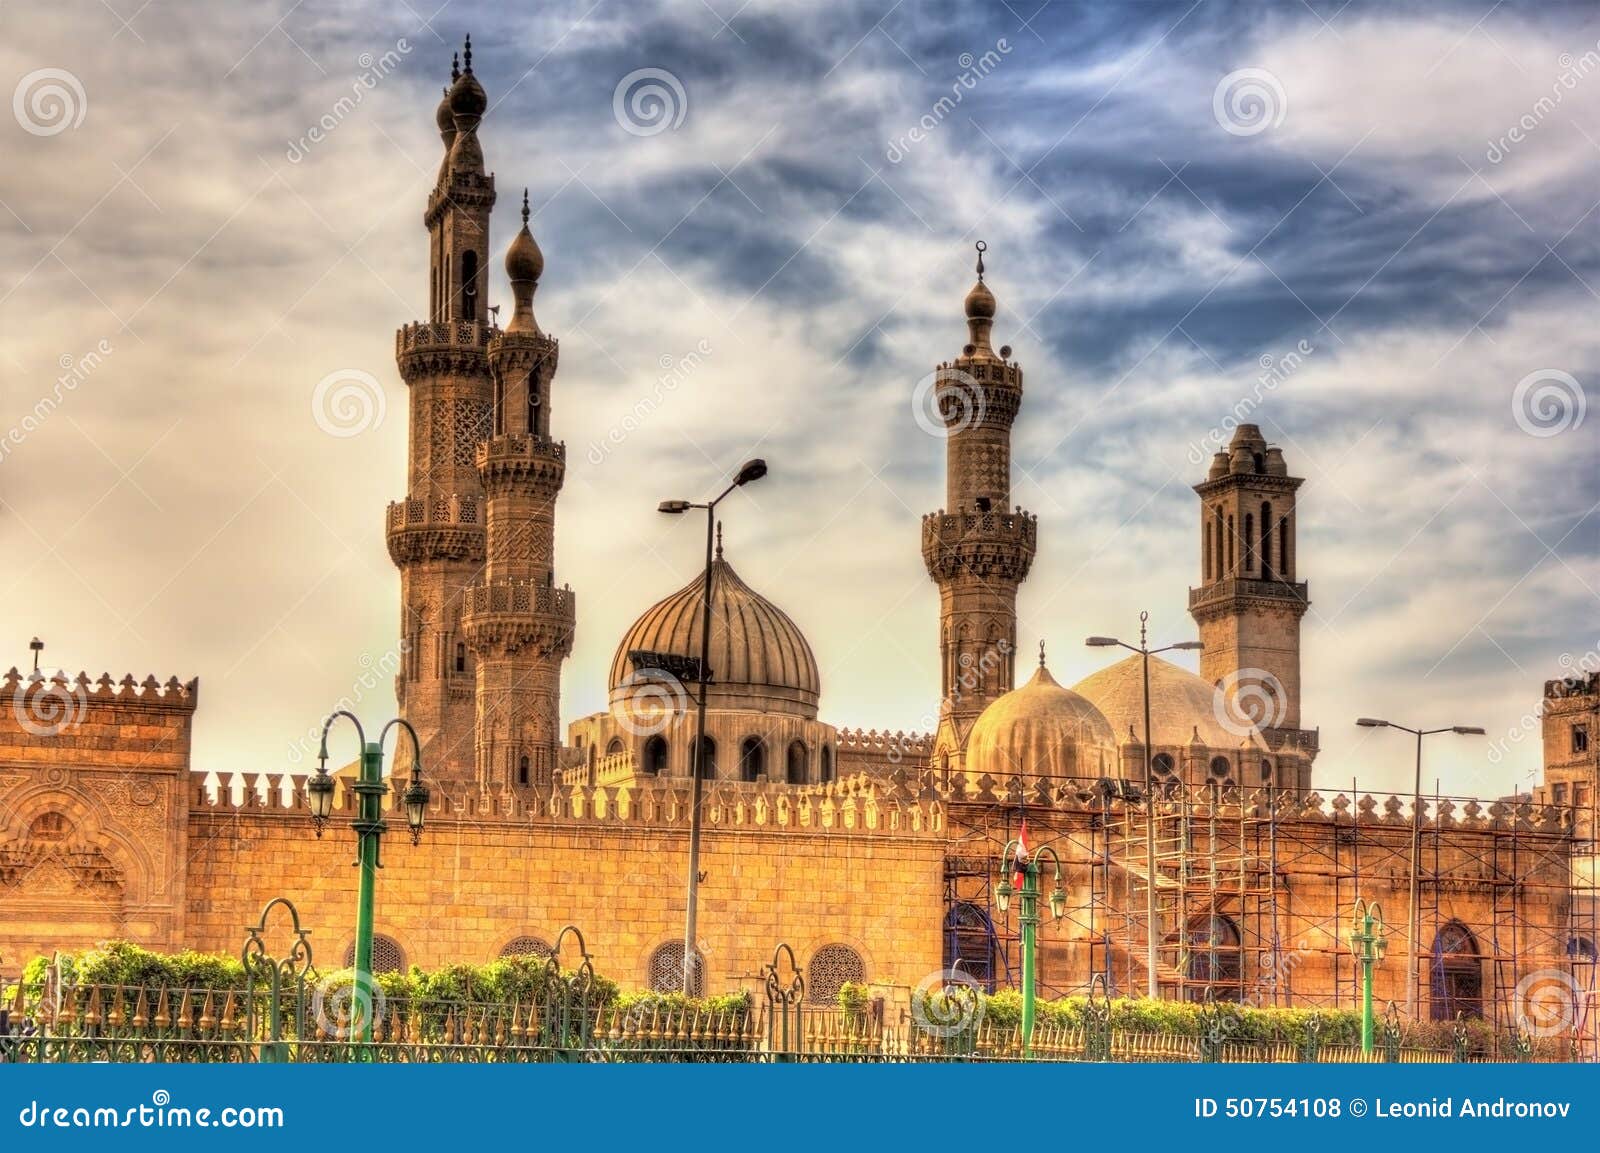 al-azhar mosque in cairo